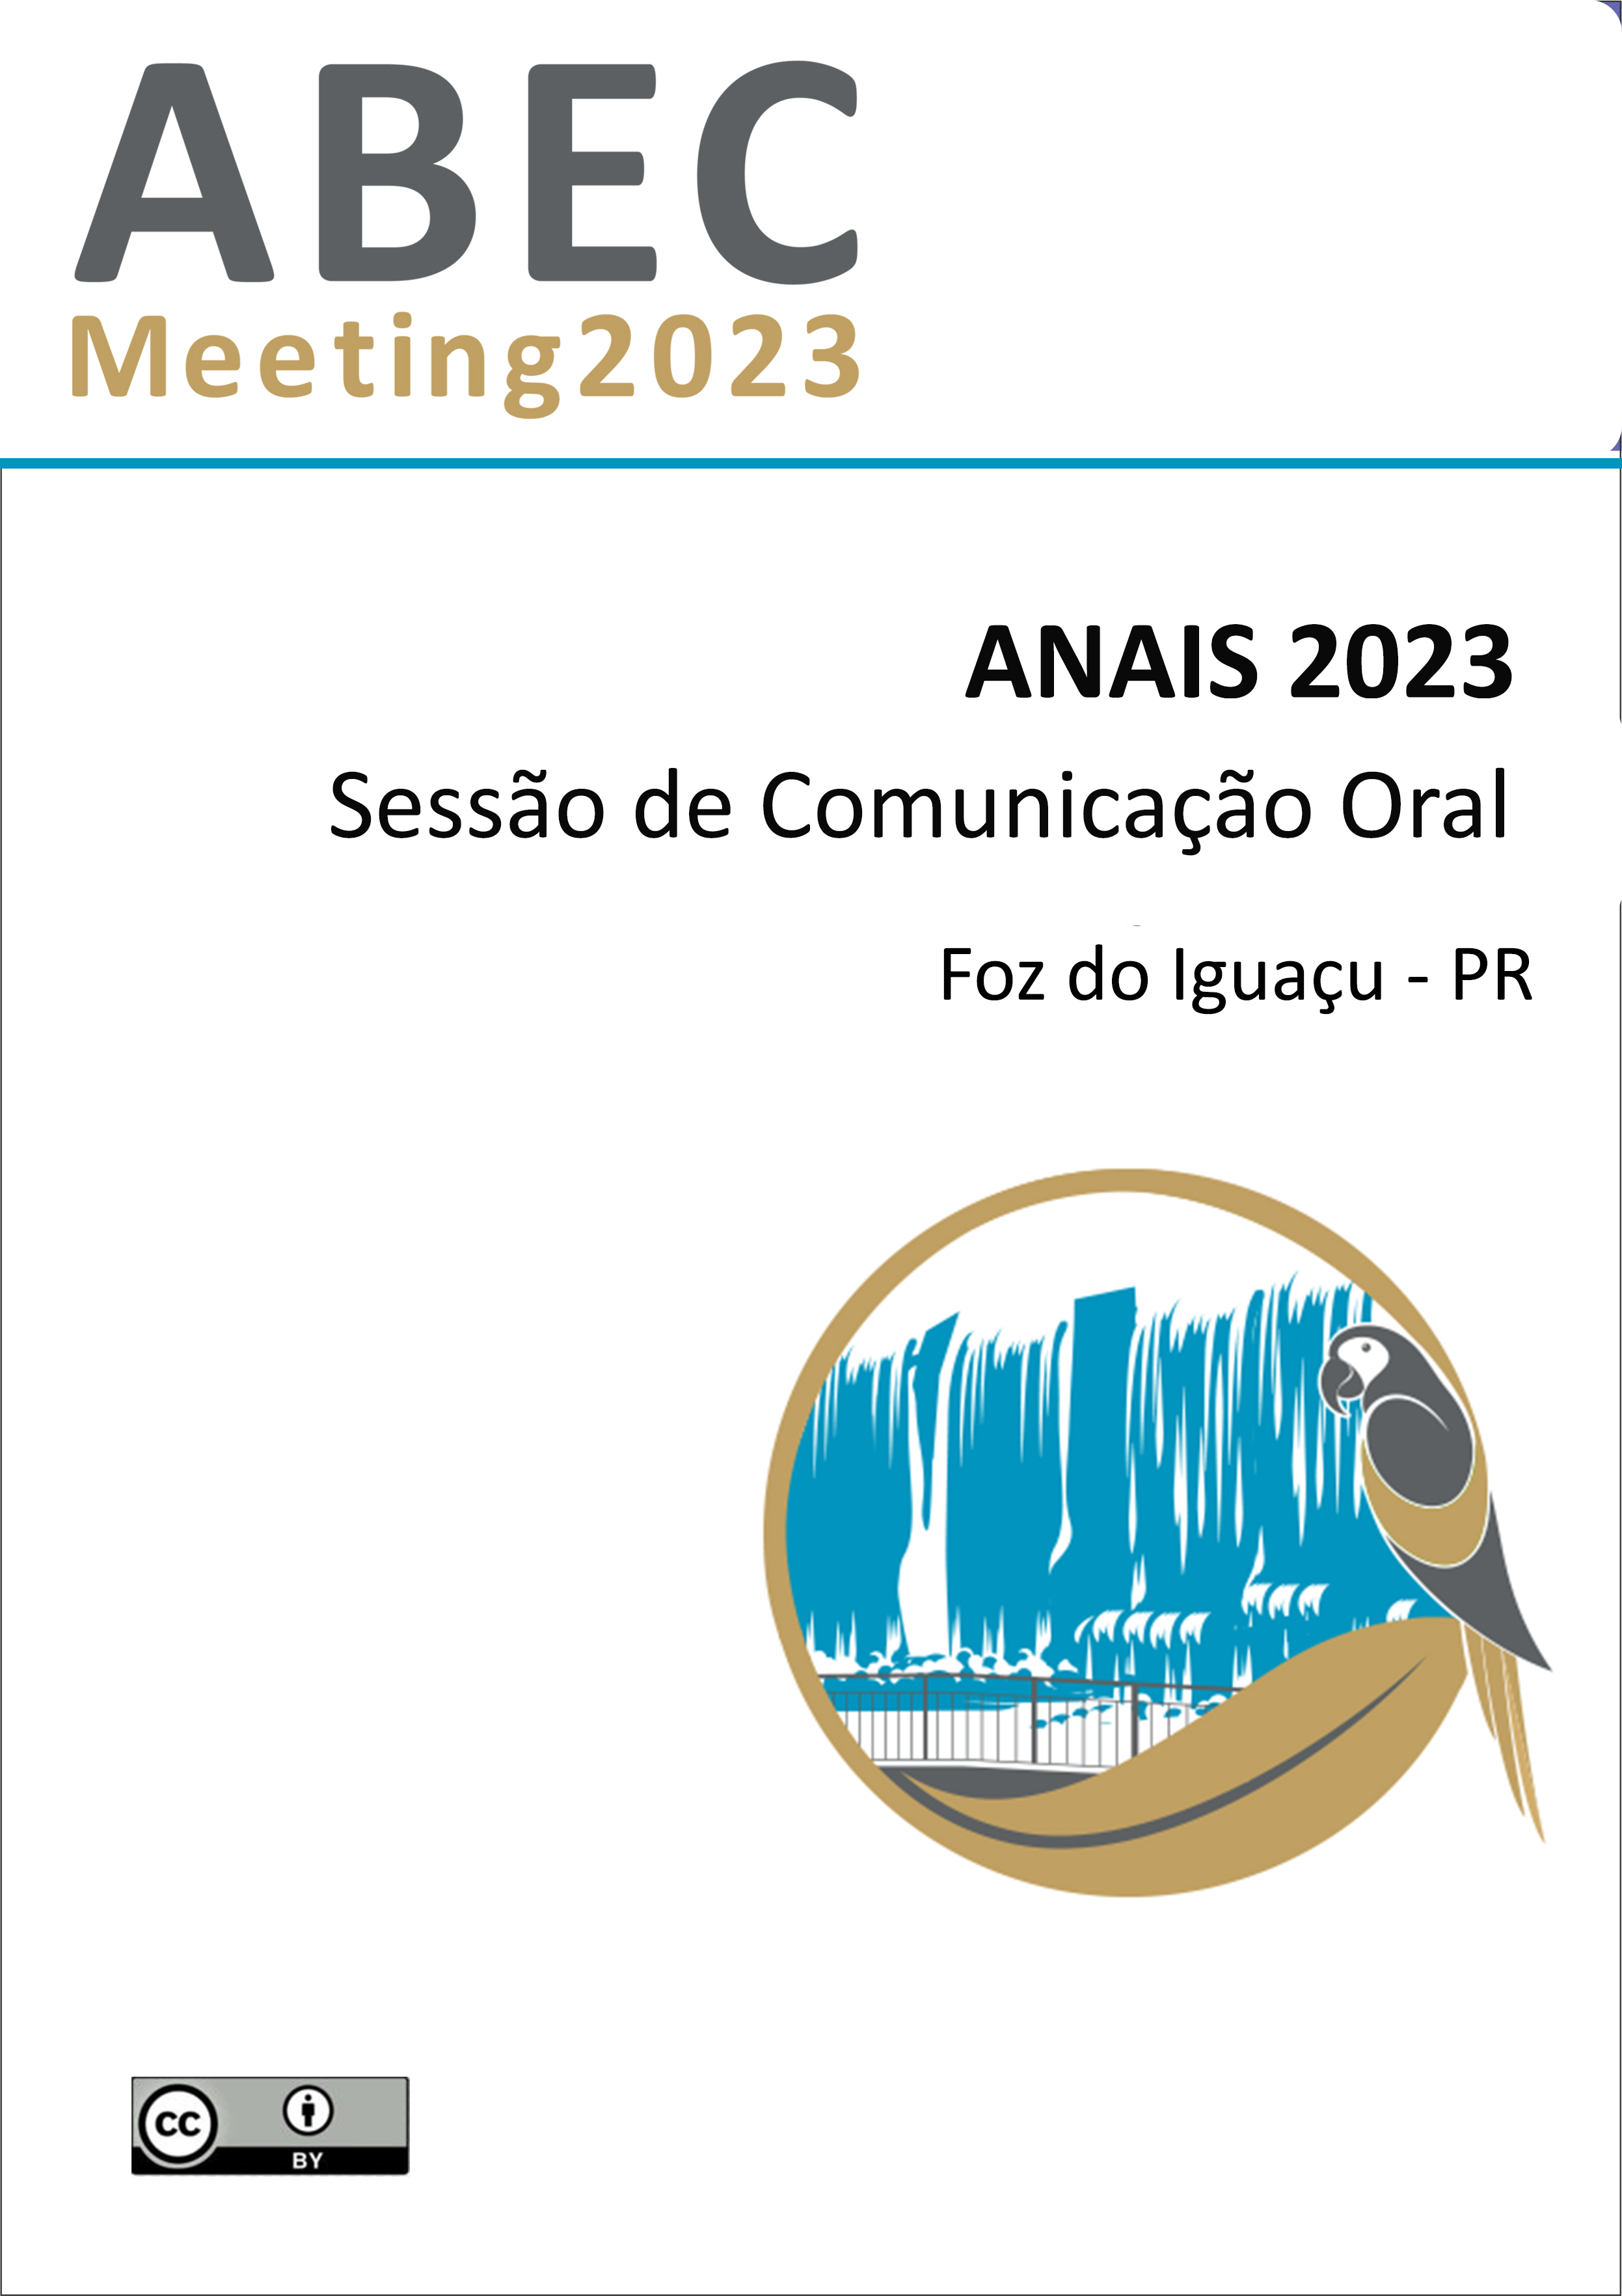 					Visualizar 2023: Abec Meeting 2023
				